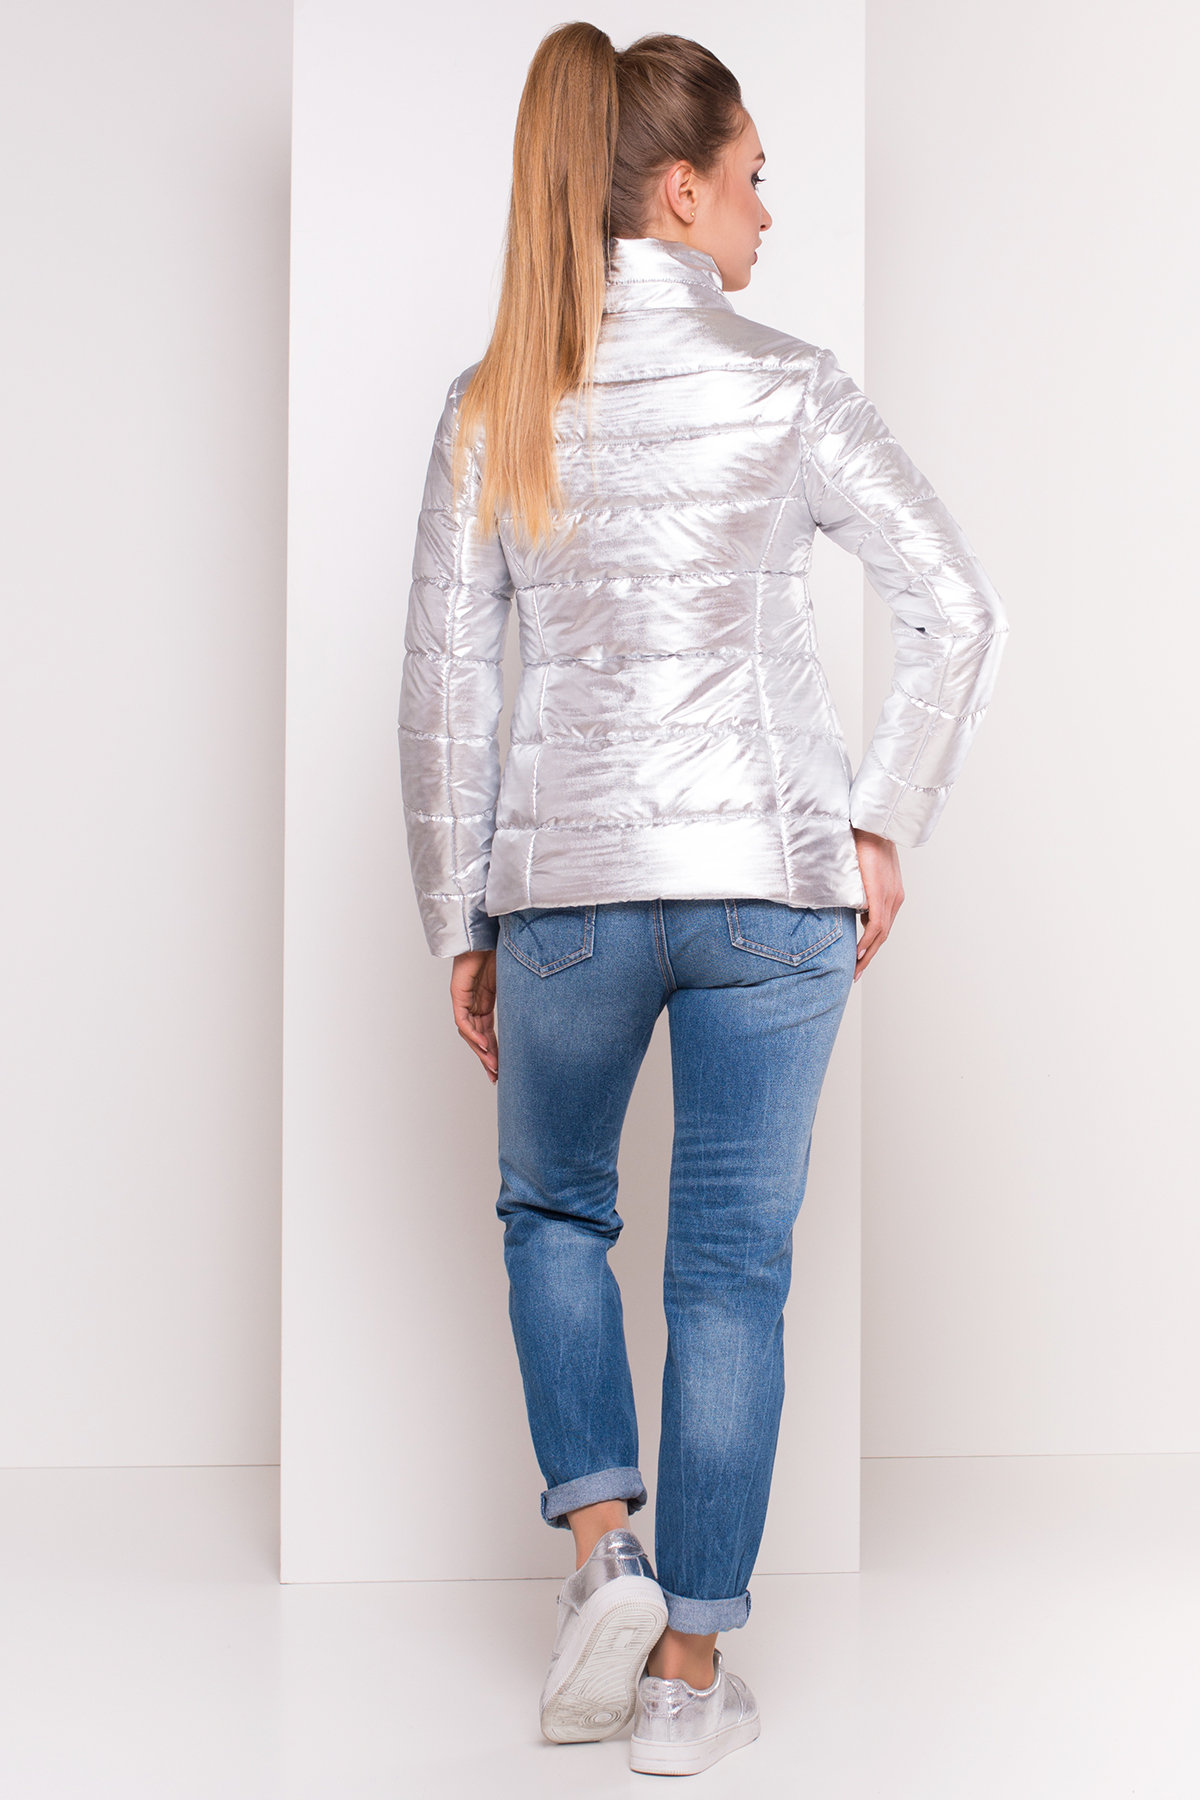 Куртка металлик Эллария 4589 Цвет: Серебро